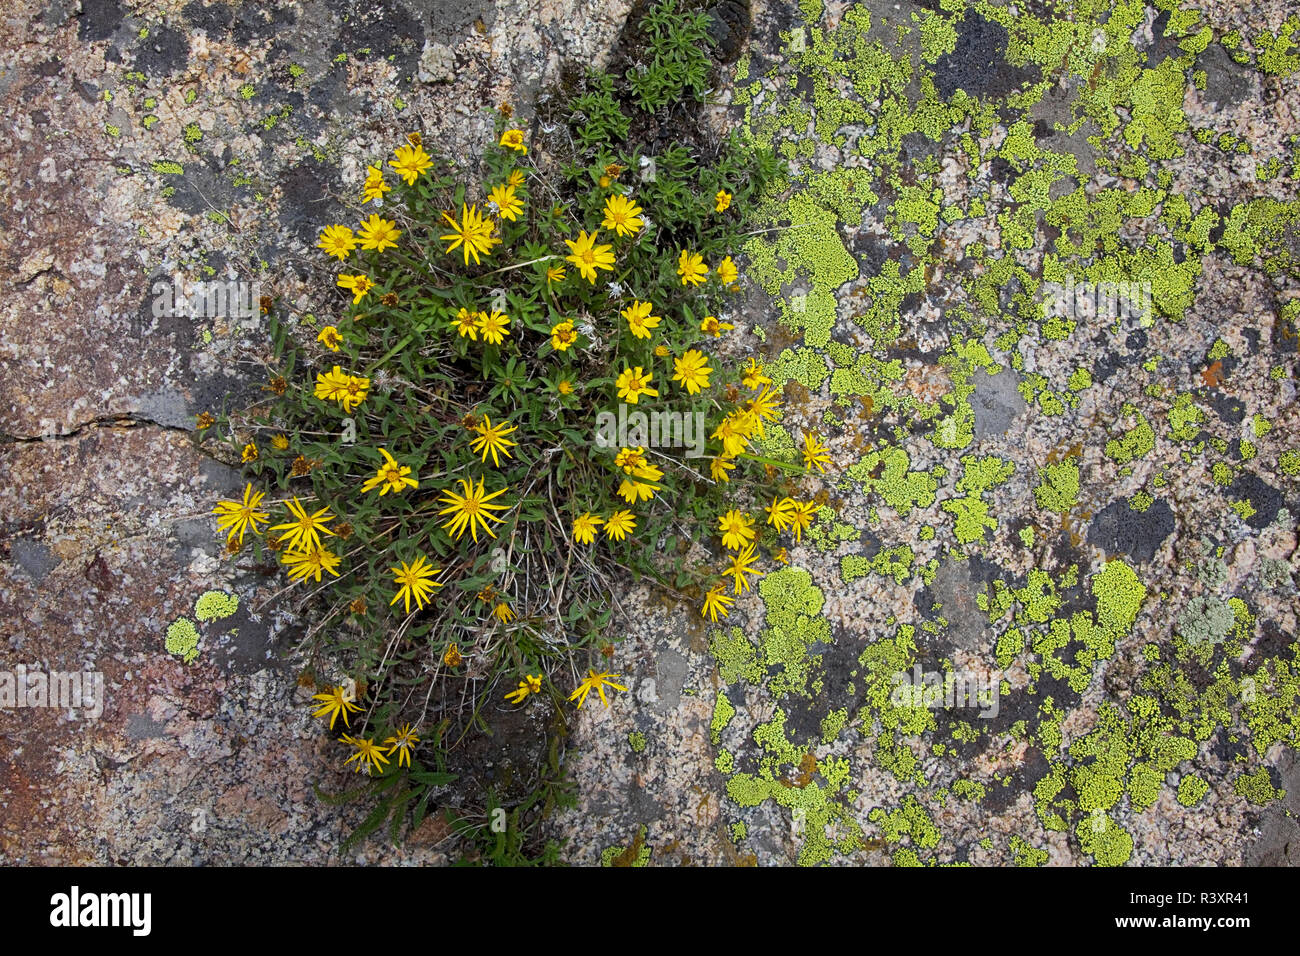 USA, Colorado, White River National Forest, Lichen on rock, Dwarf Golden Aster, Heterotheca pumila Stock Photo